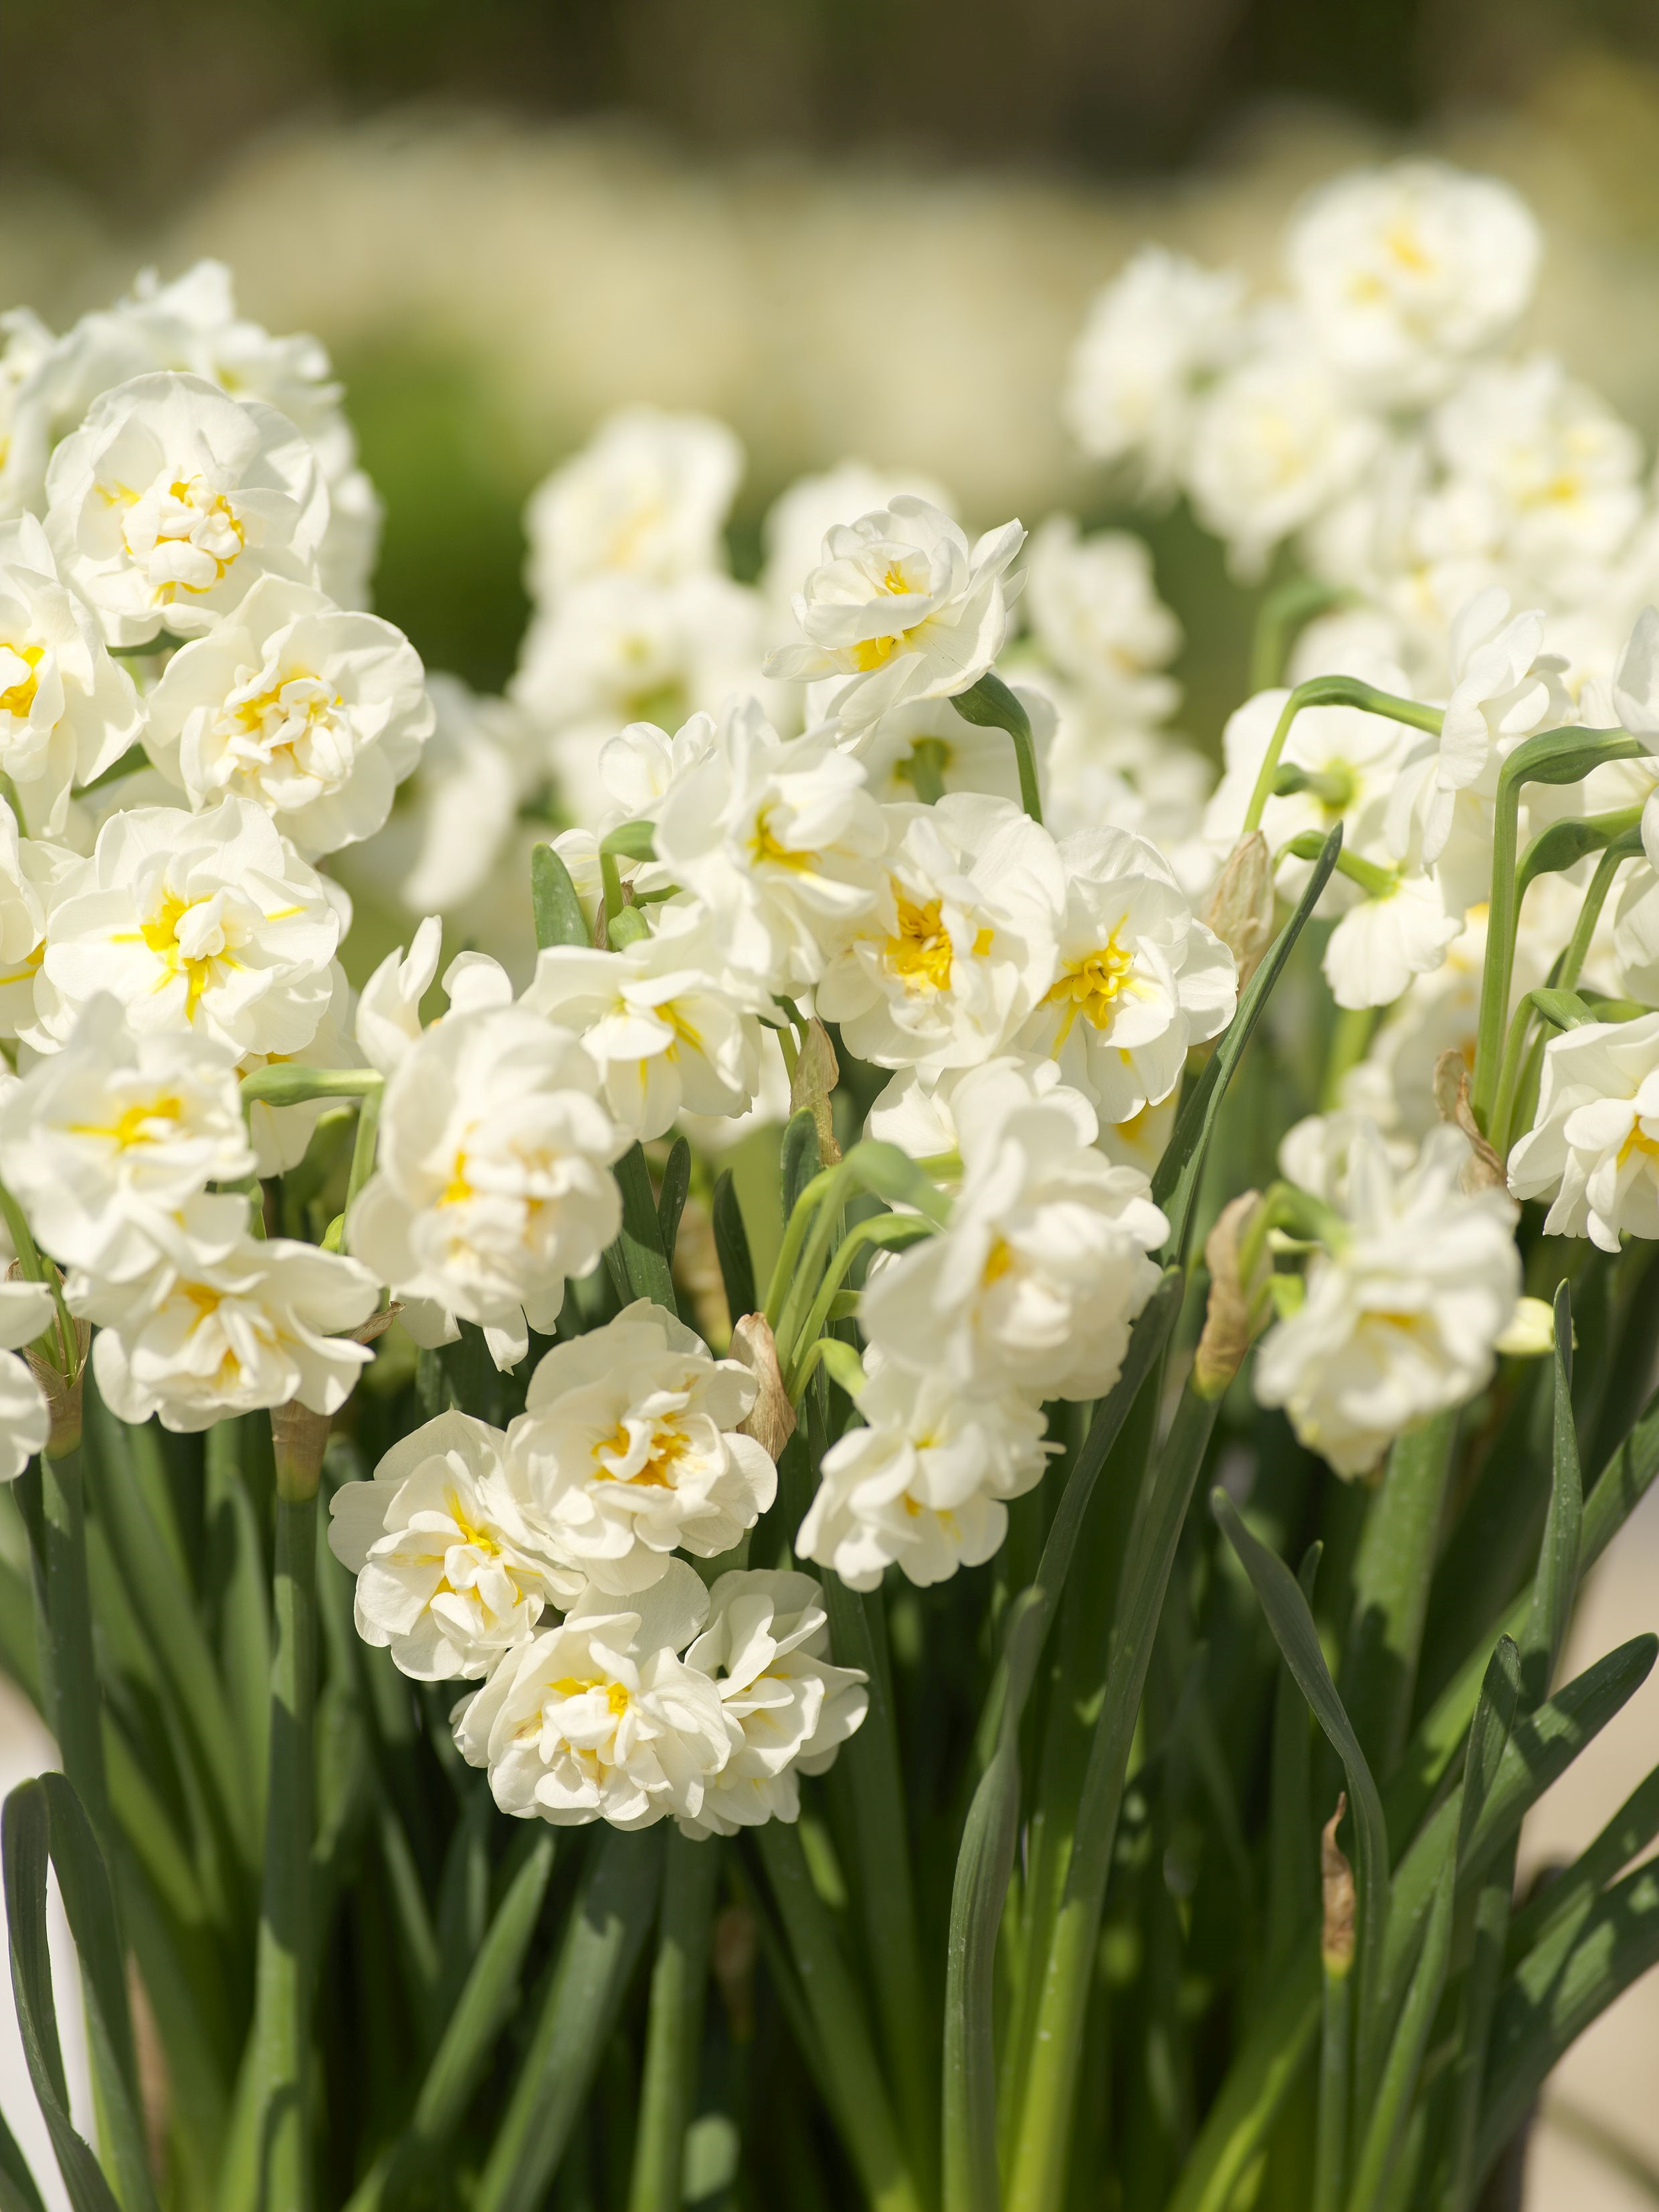 Narcissus Bunch Flowering 'Bridal Crown' Daffodil